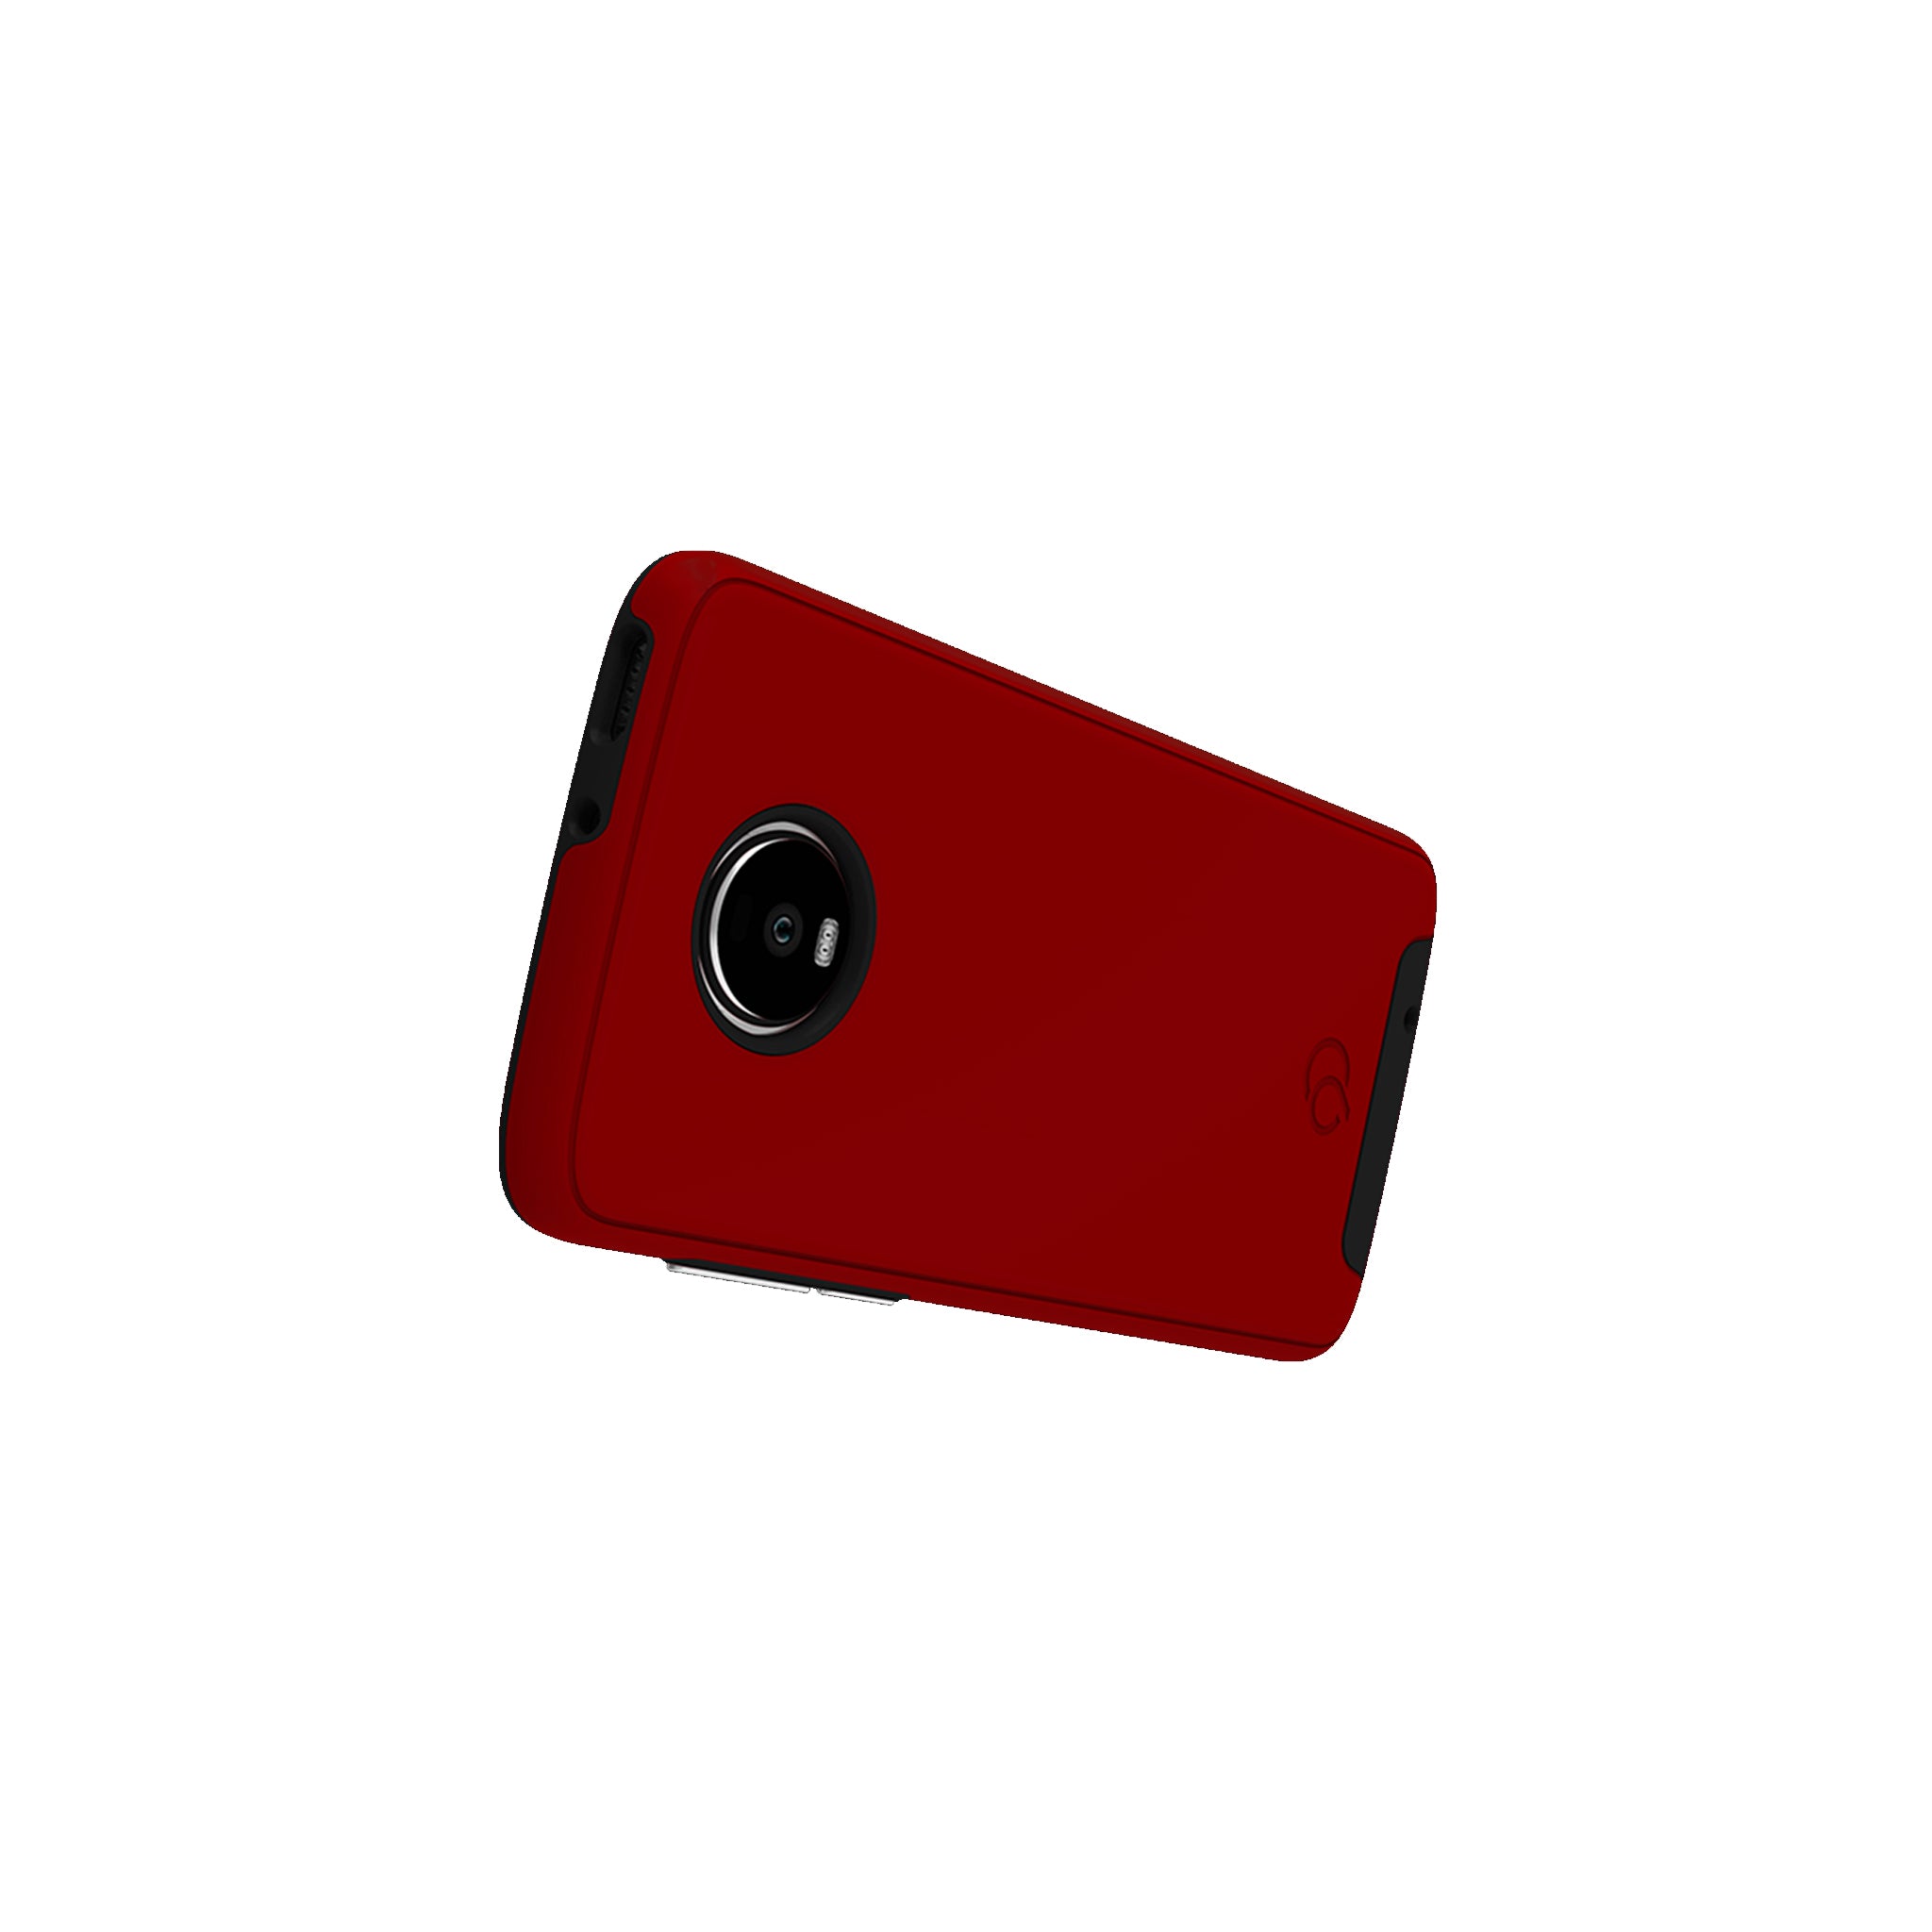 Nimbus9 - Cirrus 2 Case For Motorola Moto Z4 / Z4 Play - Crimson